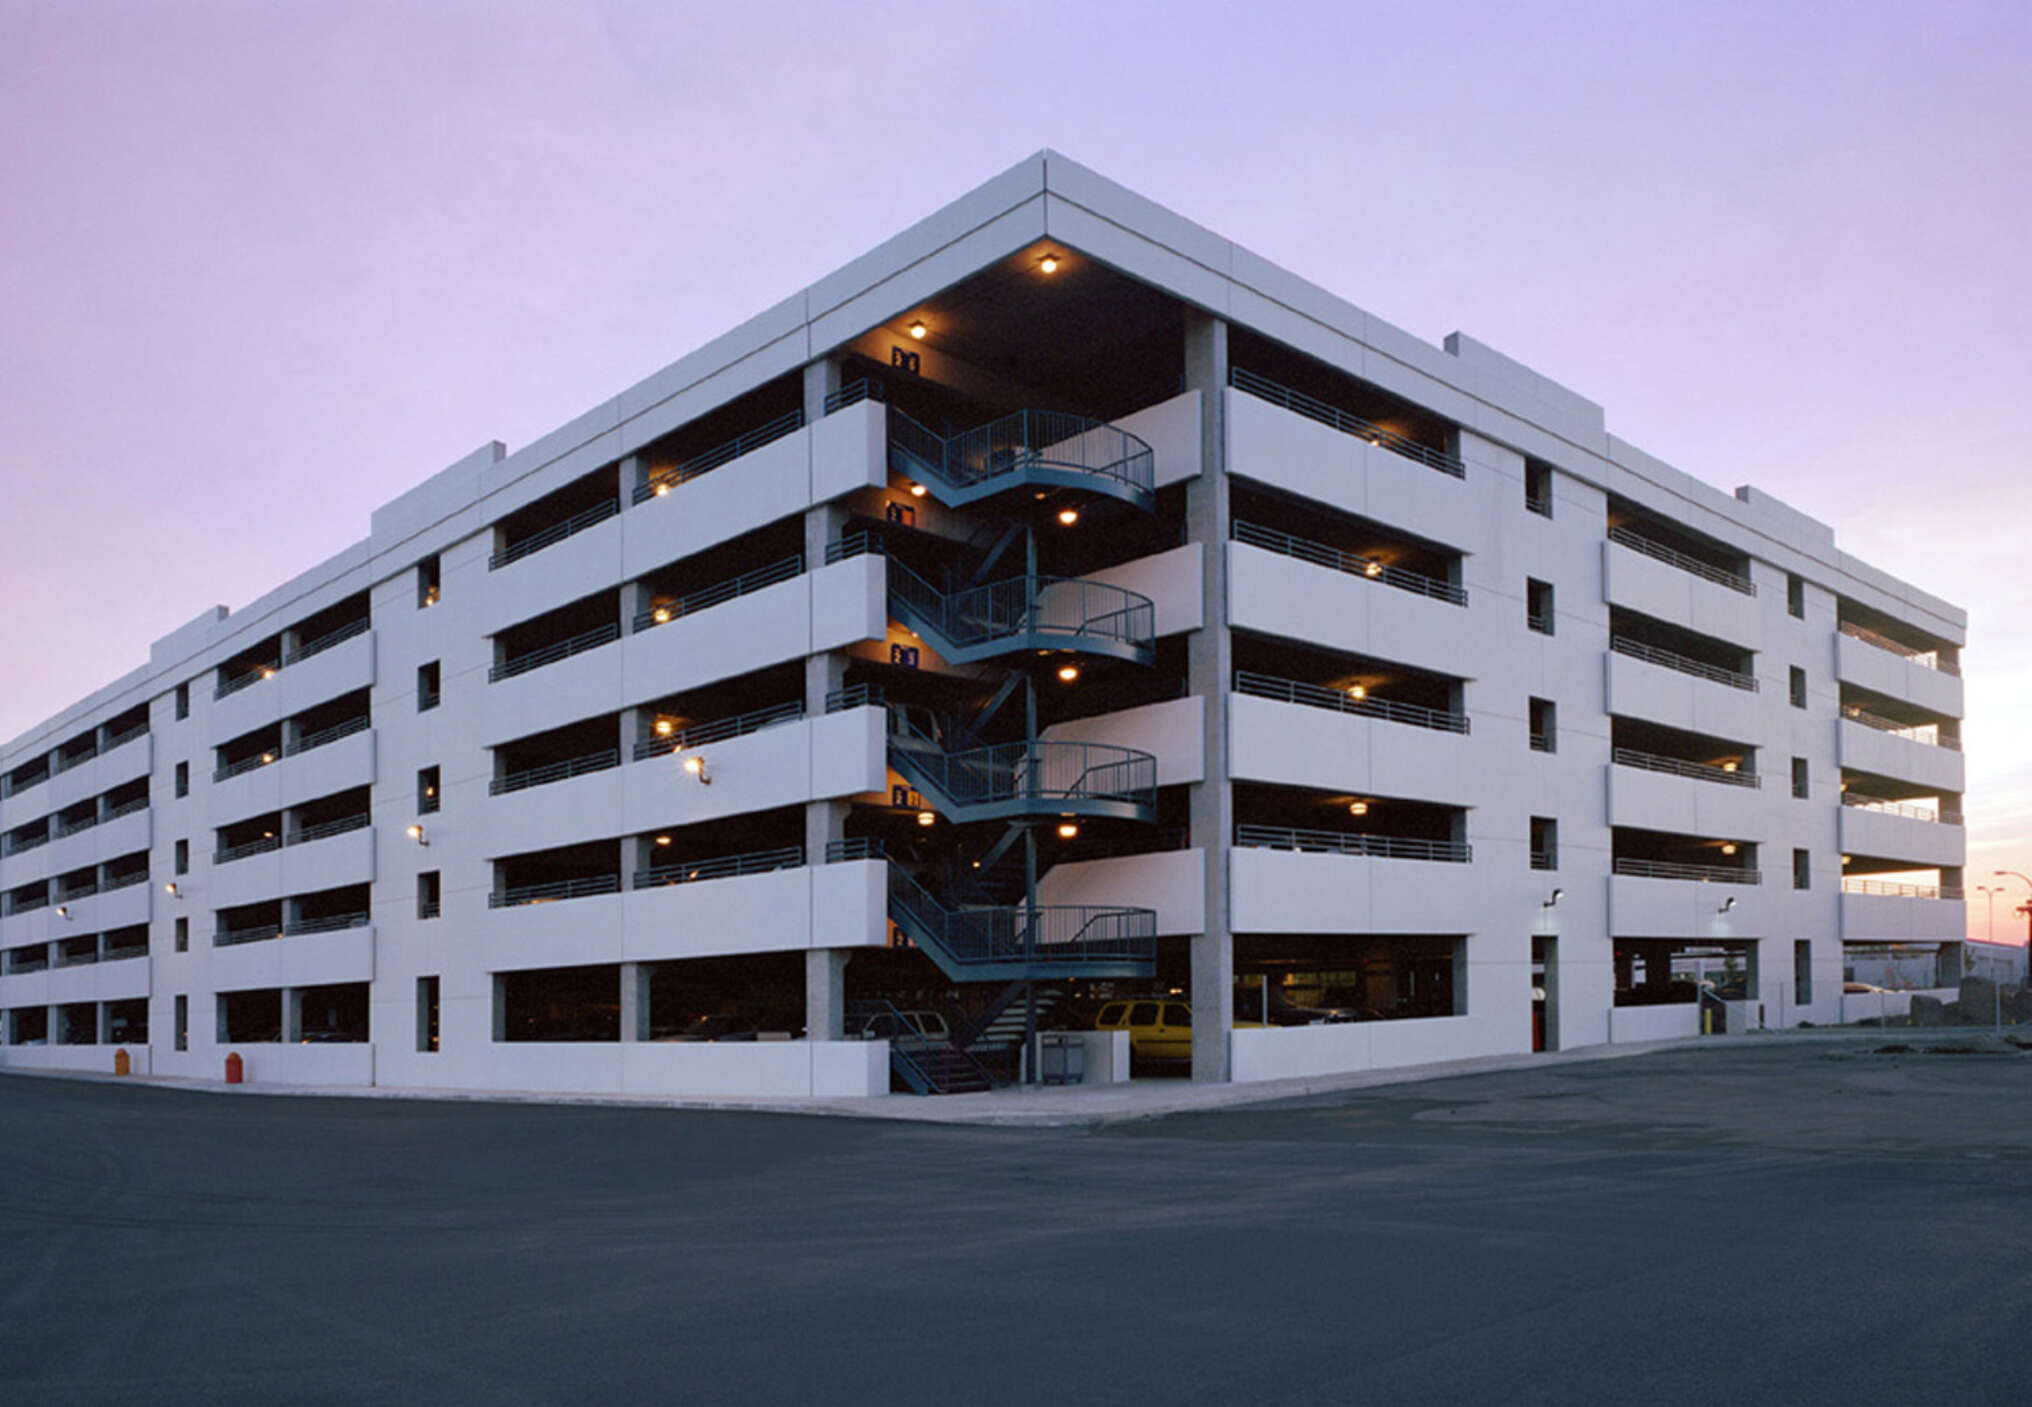 Spokane International Airport Parking Garage Addition